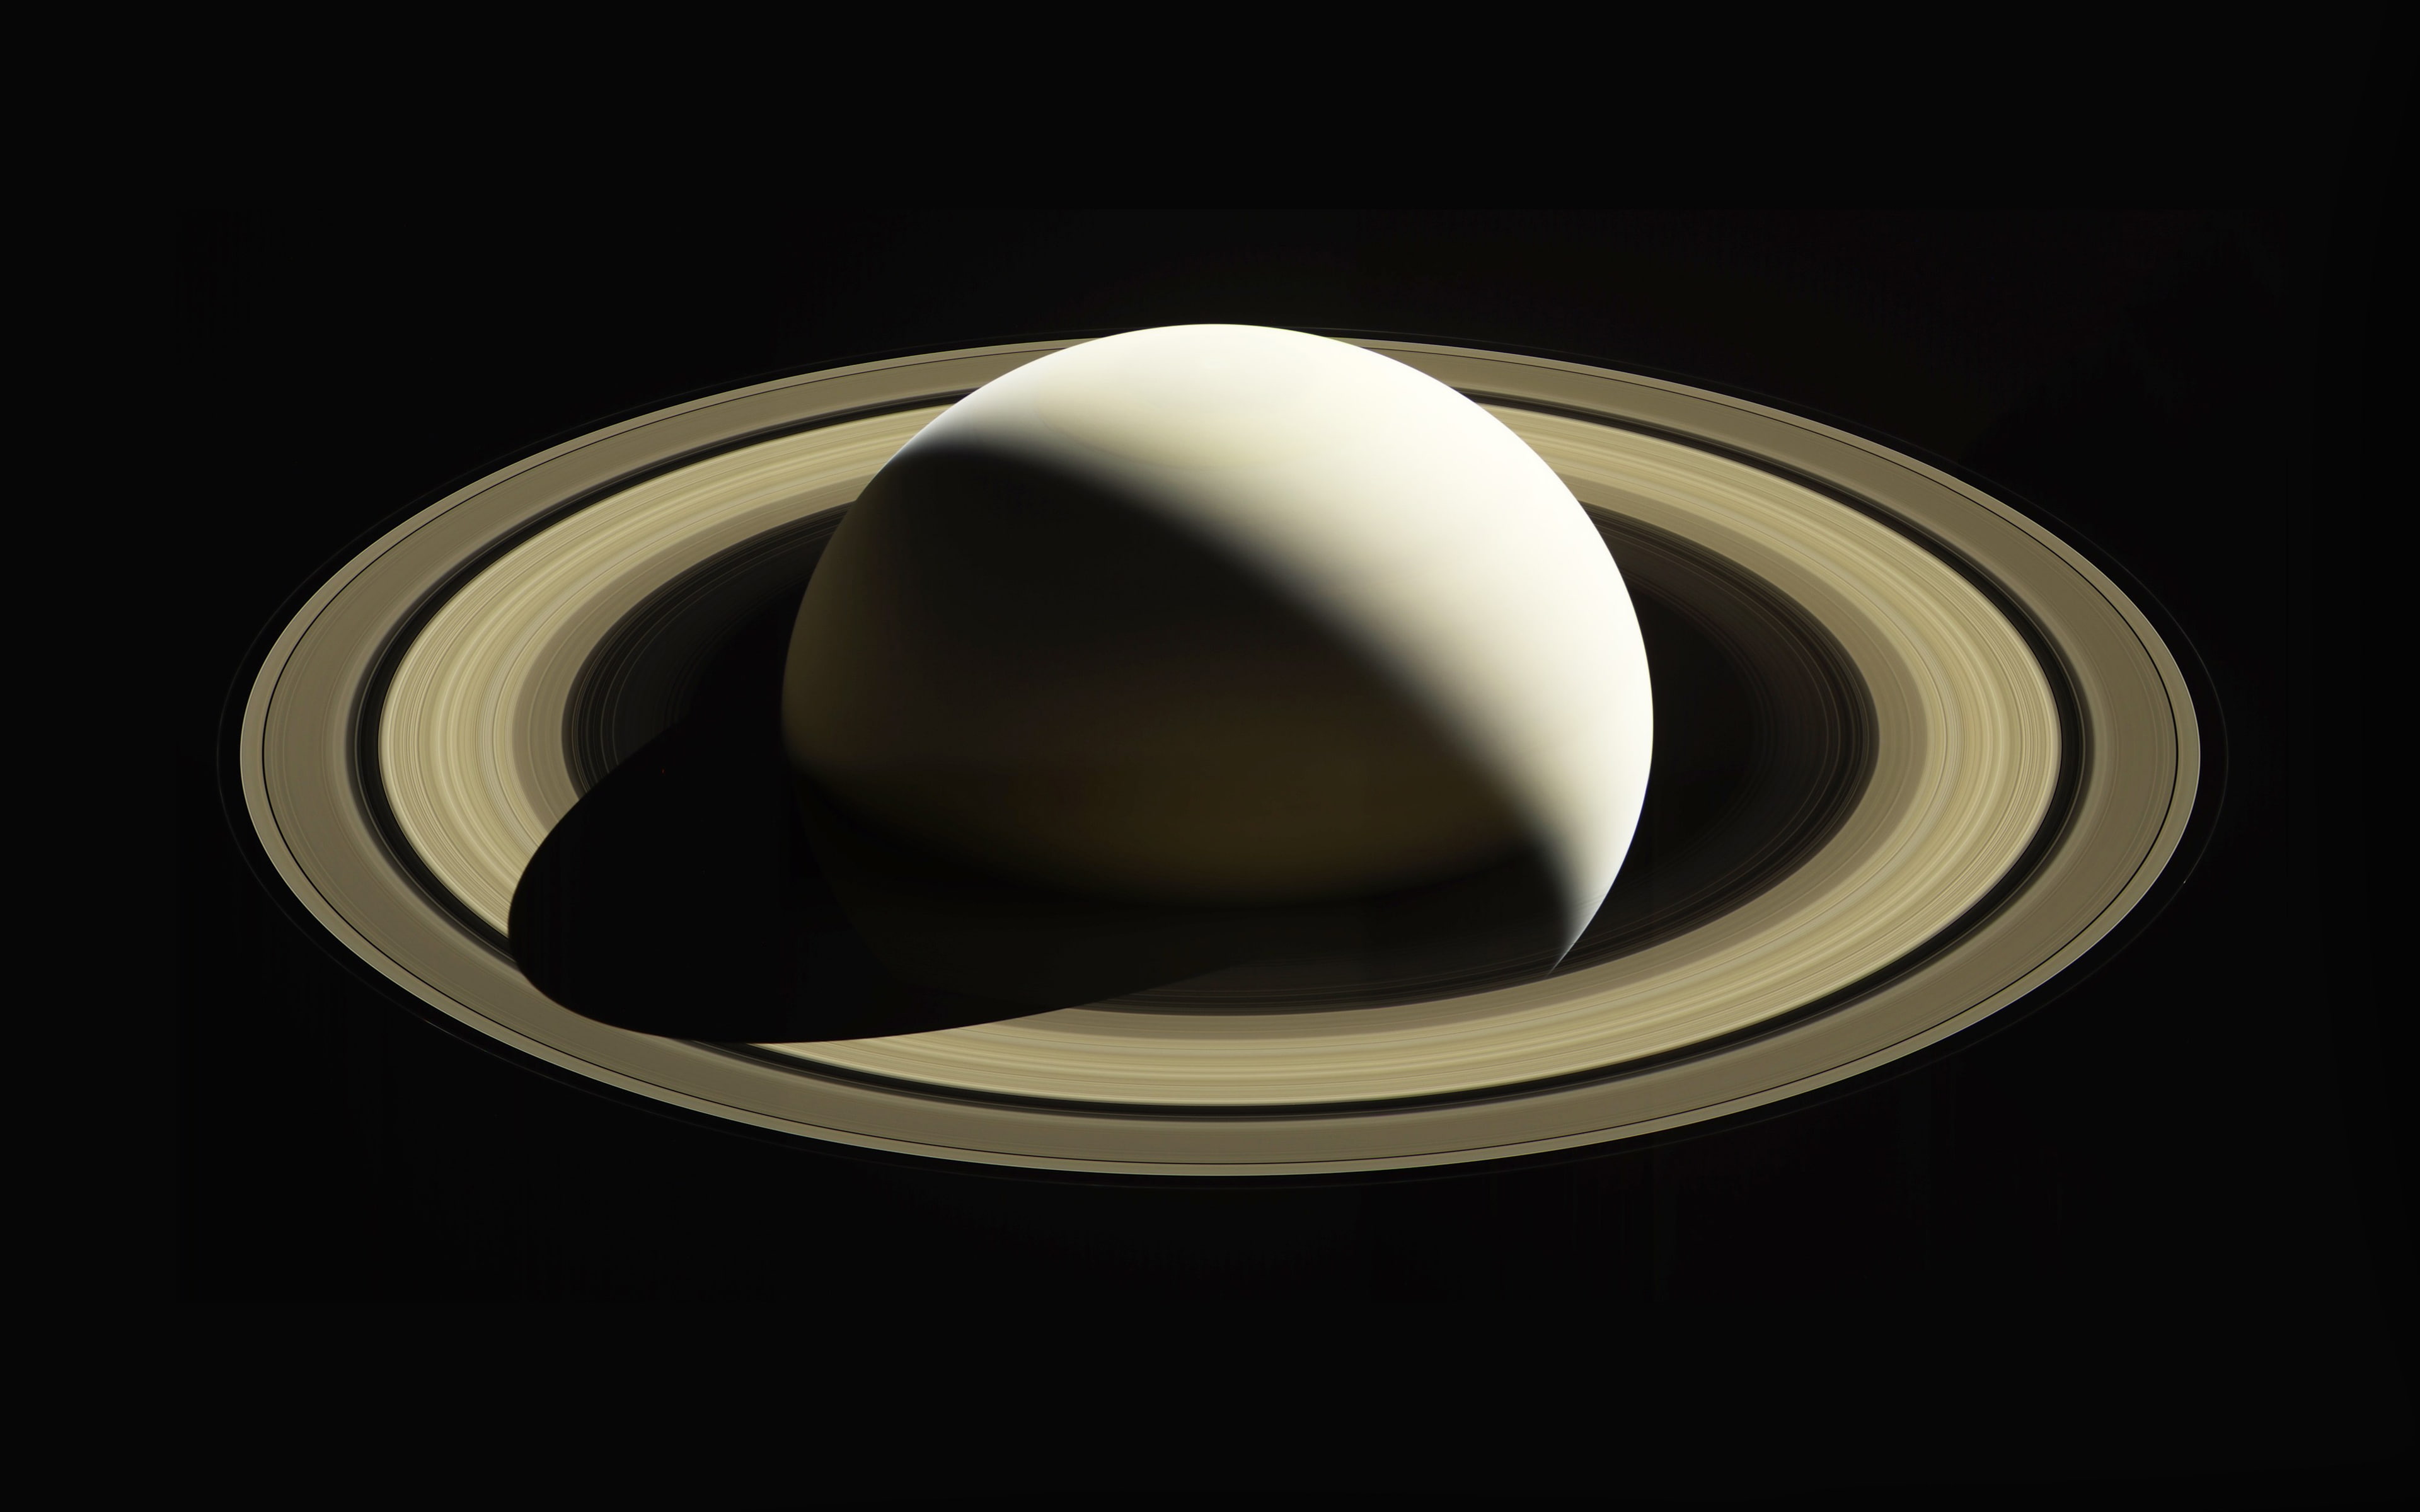 saturn, planetary ring, galaxy, Space, black background, geometric shape